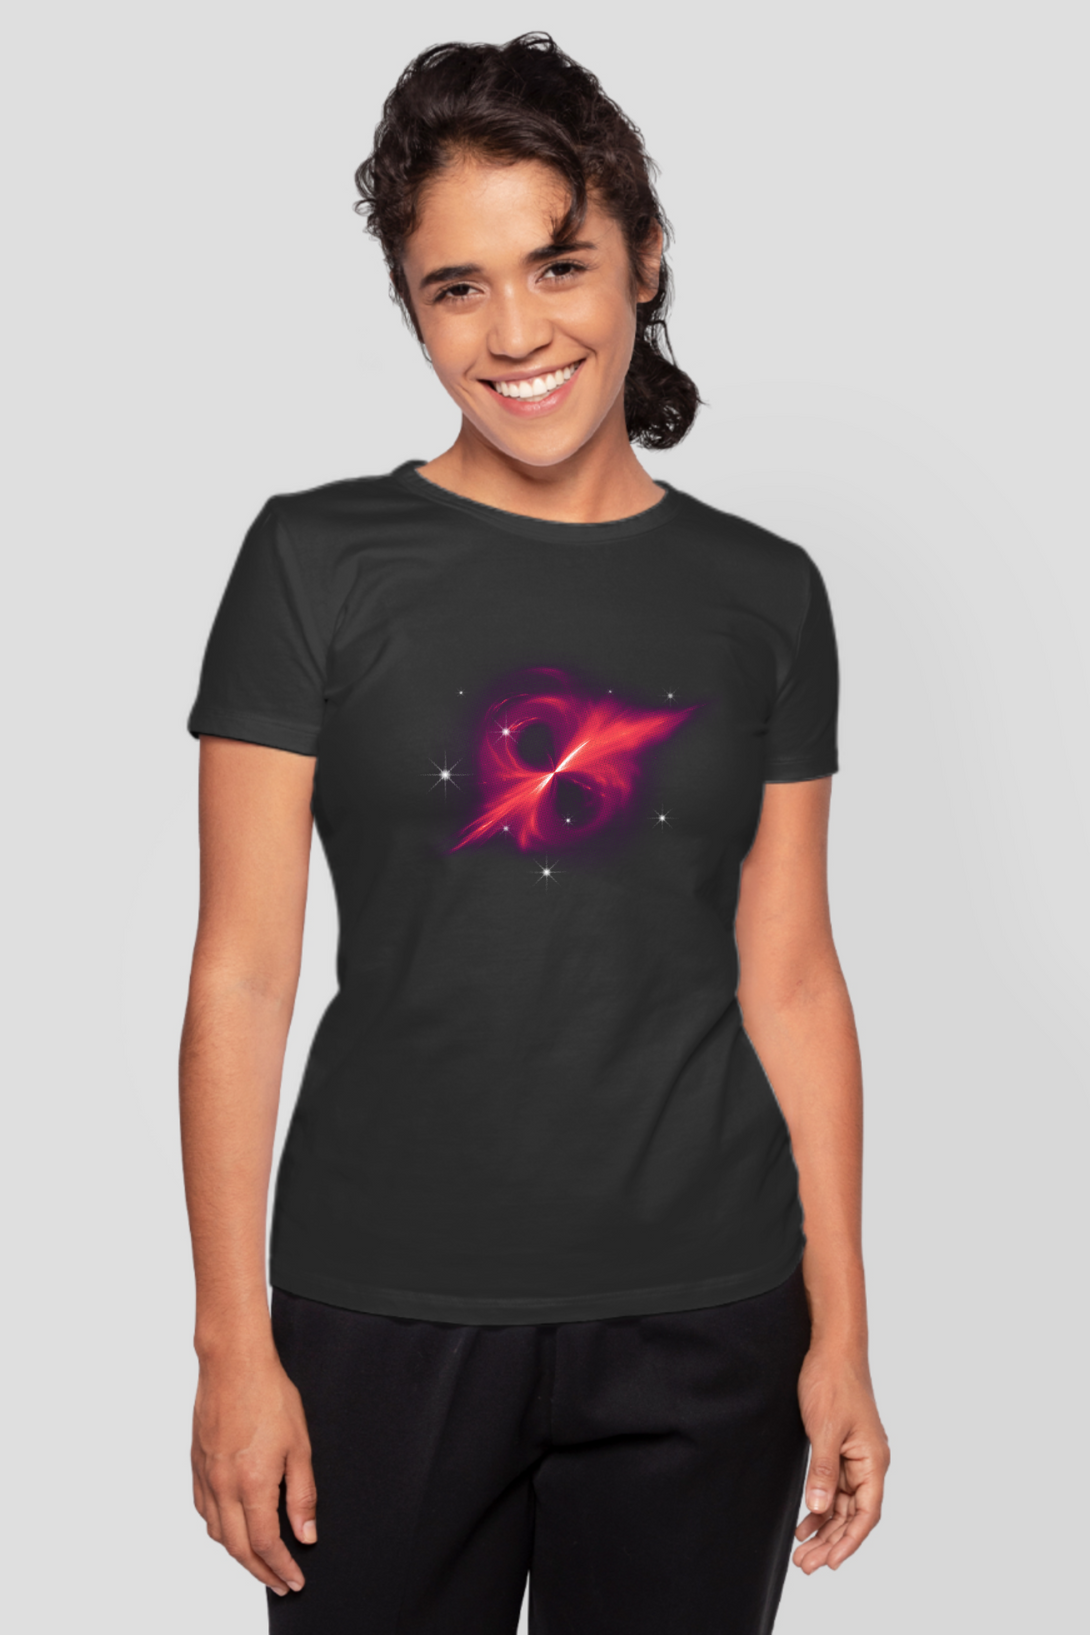 Black Hole Printed T-Shirt For Women - WowWaves - 3